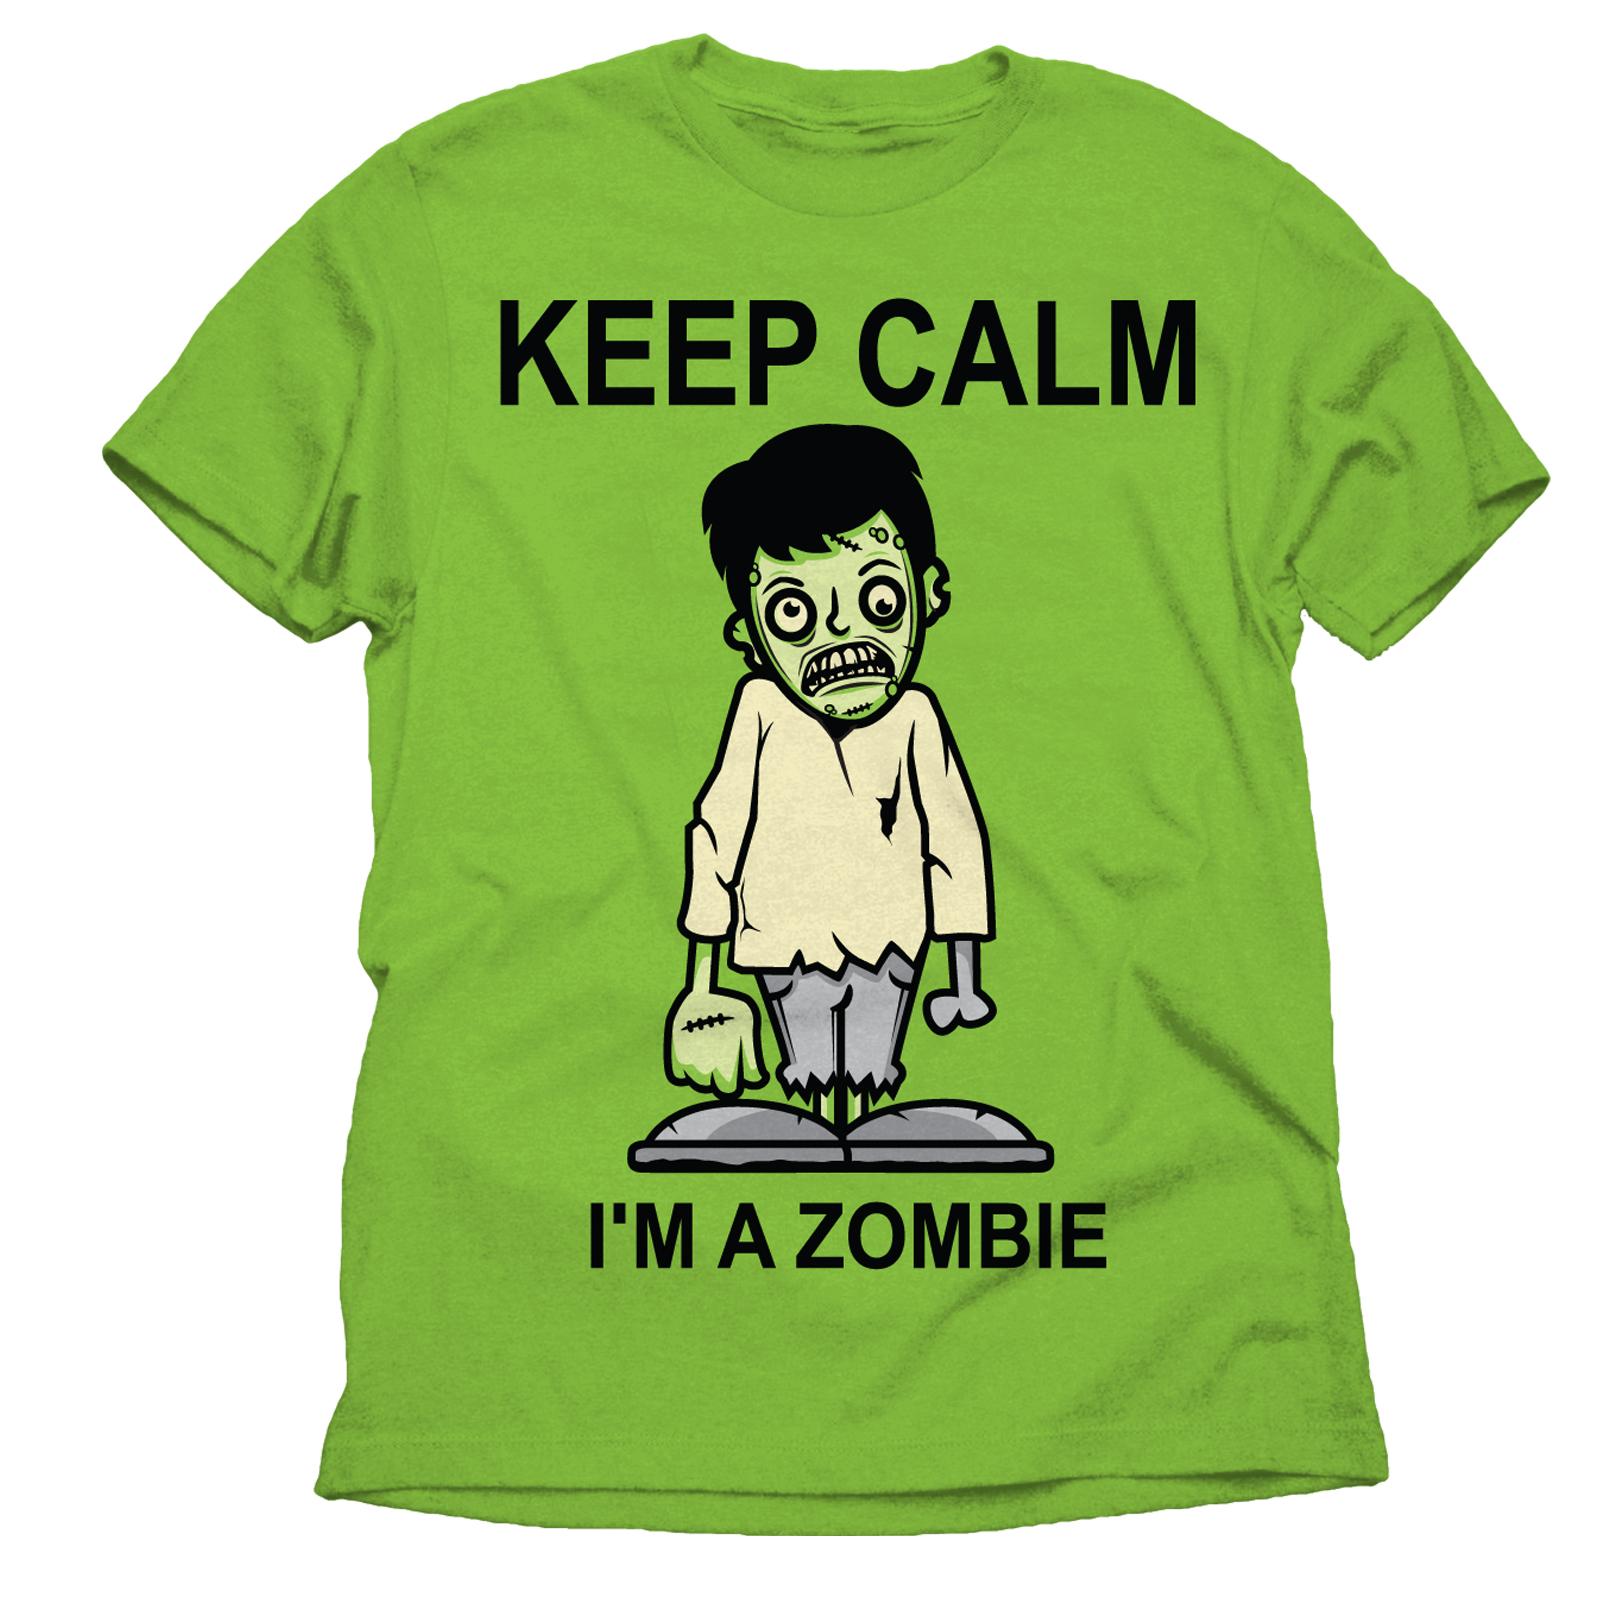 Route 66 Boy's Graphic T-Shirt - Zombie